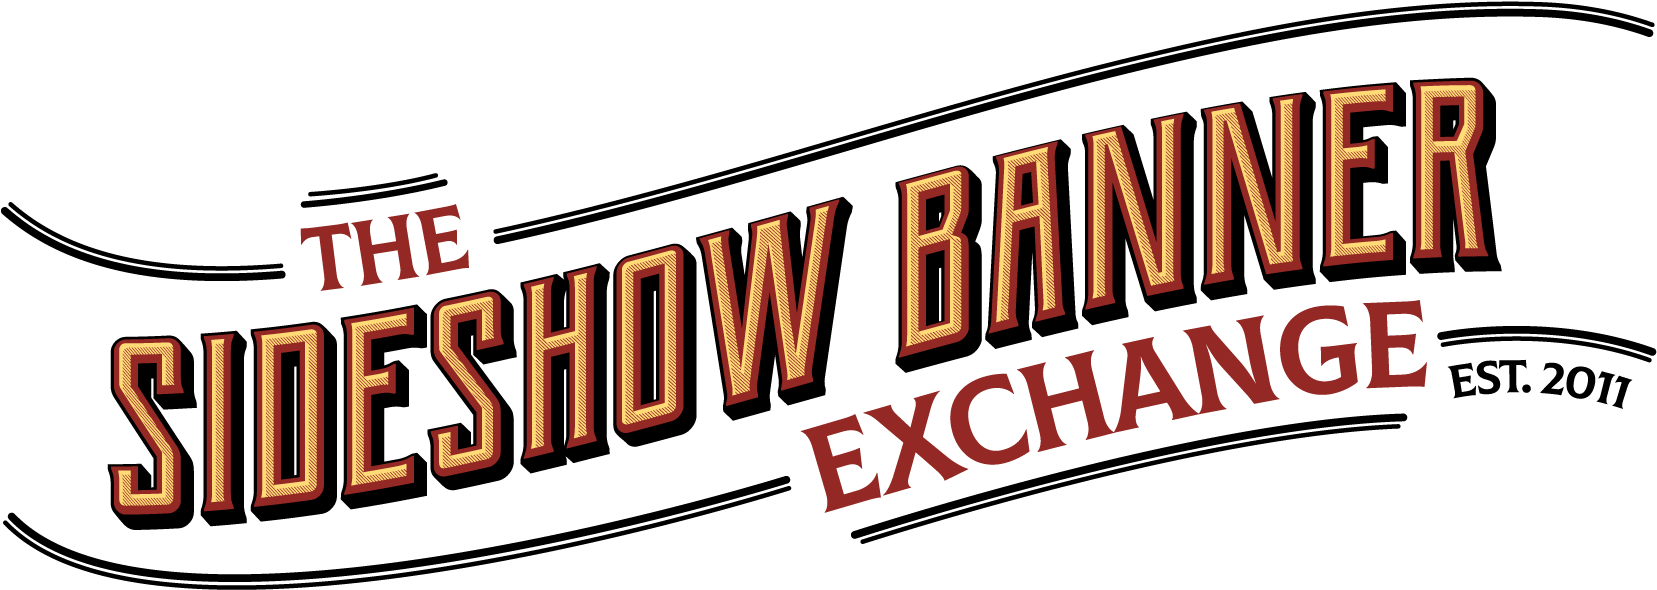 Sideshow Banner Exchange Logo PNG